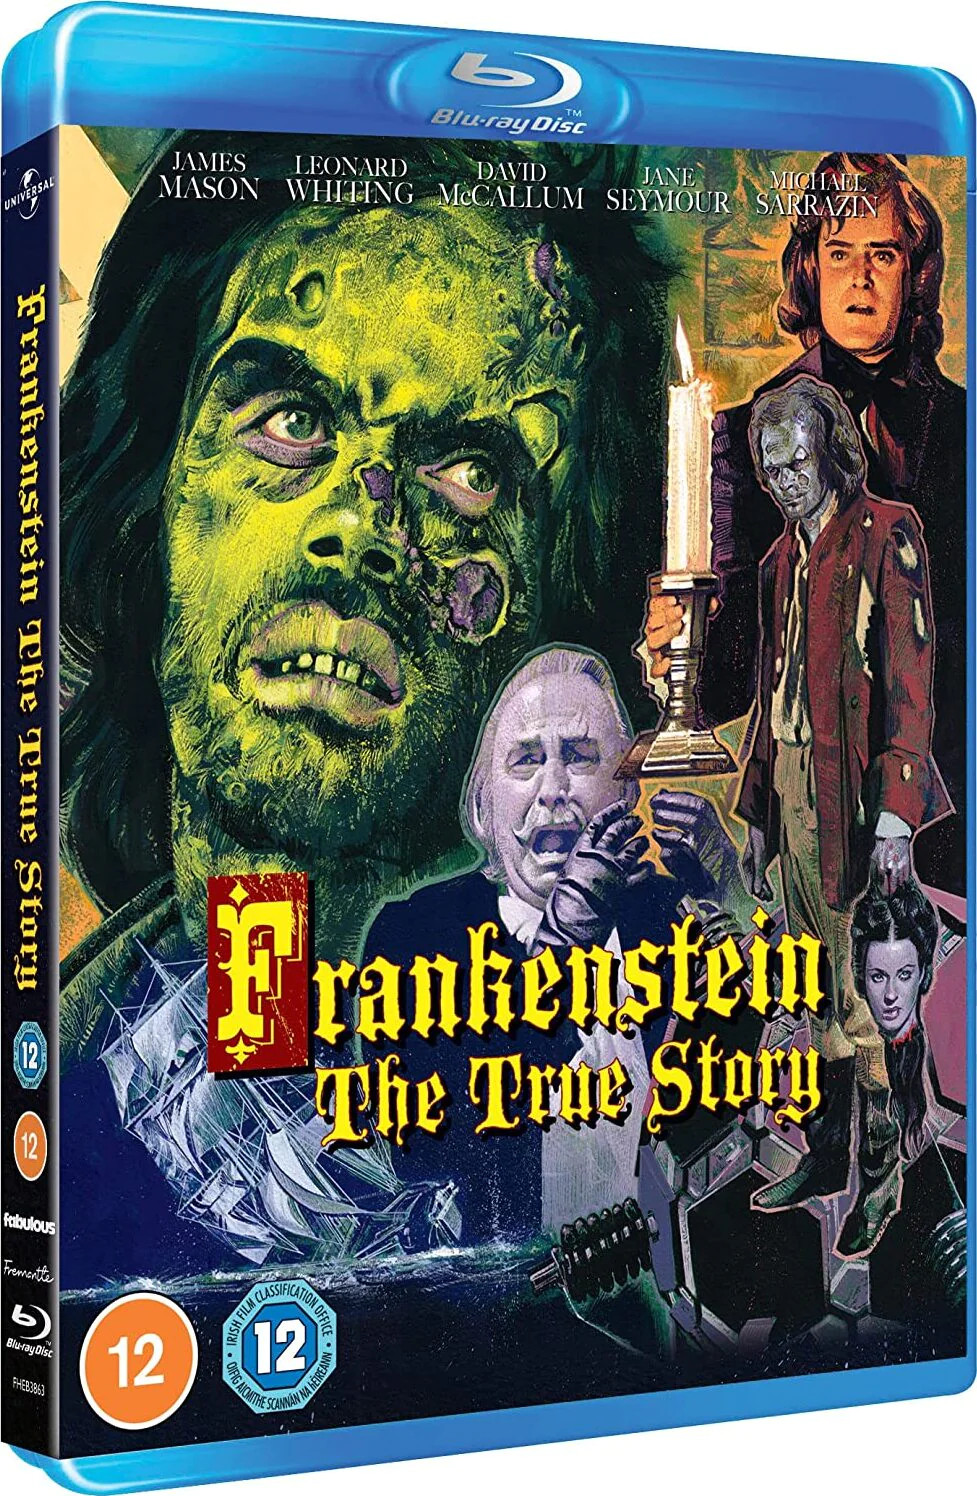 Frankenstein The True Story